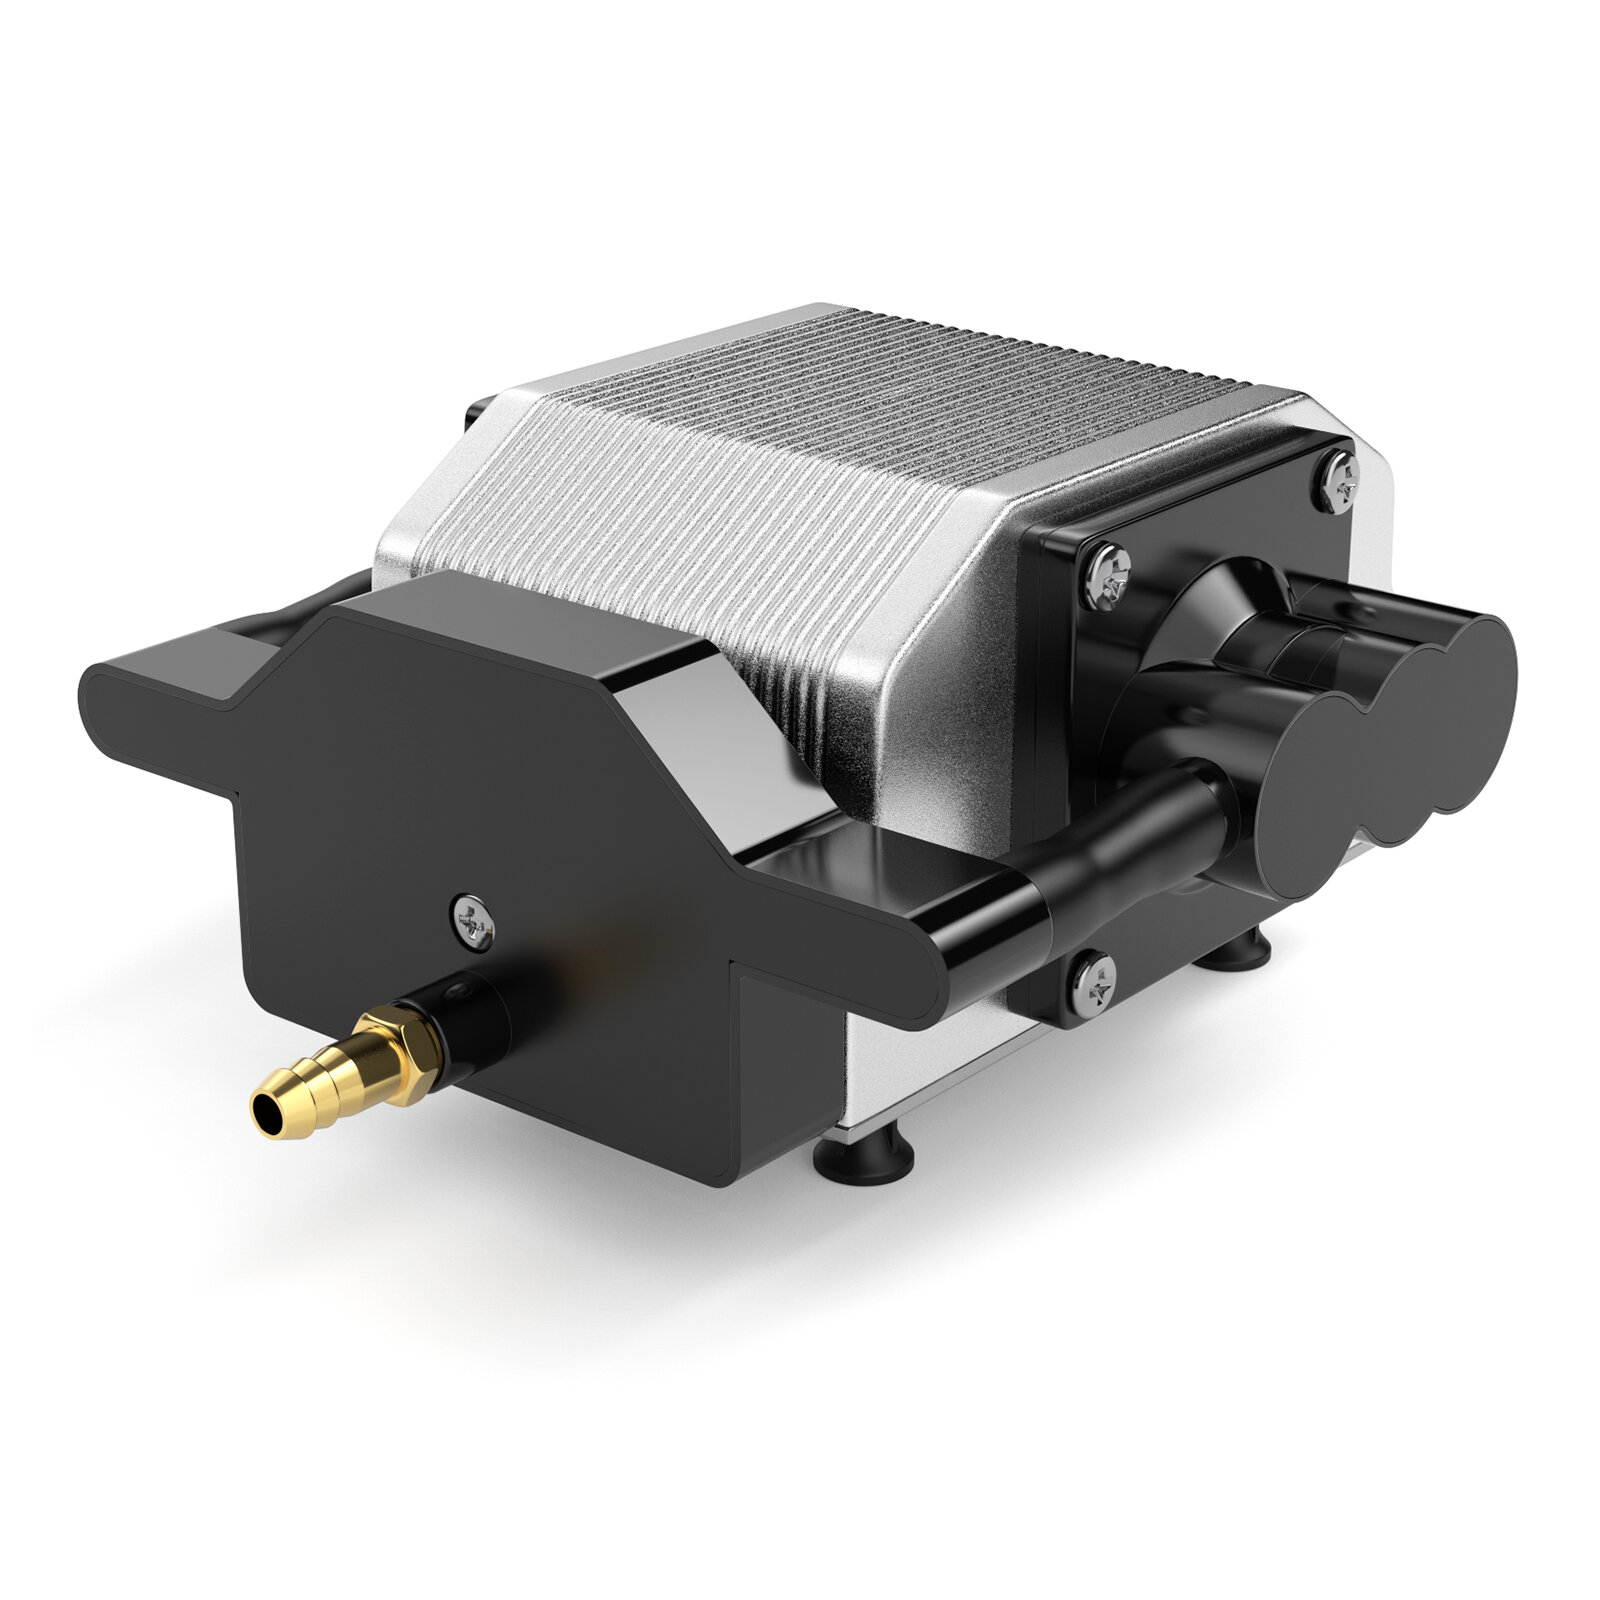 Image of SCULPFUN 30L/Min 110V Air Pump Compressor for Laser Engraver Adjustable Speed Low Noise Low Vibration